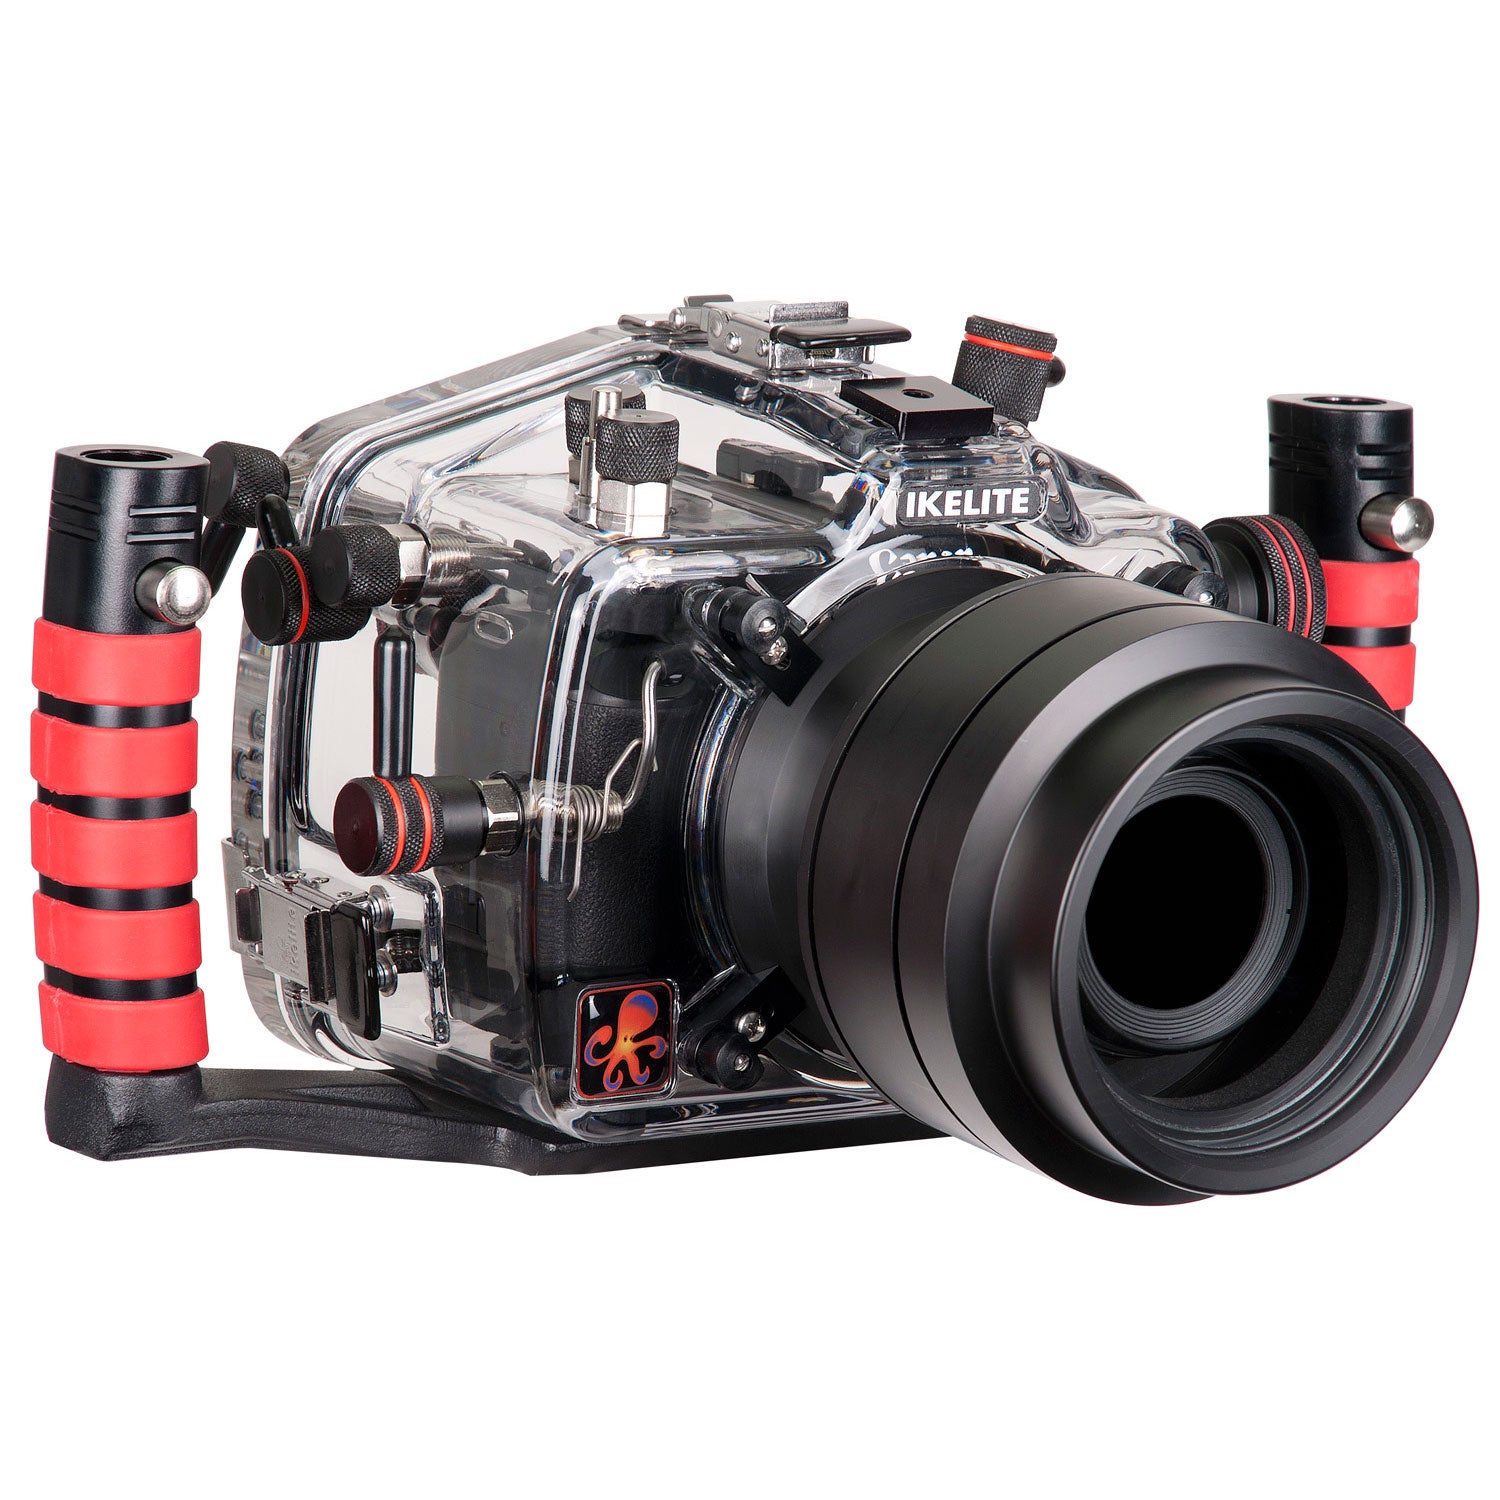 200FL Underwater TTL Housing for Canon EOS 550D Rebel T2i (Kiss X4) DSLR Cameras